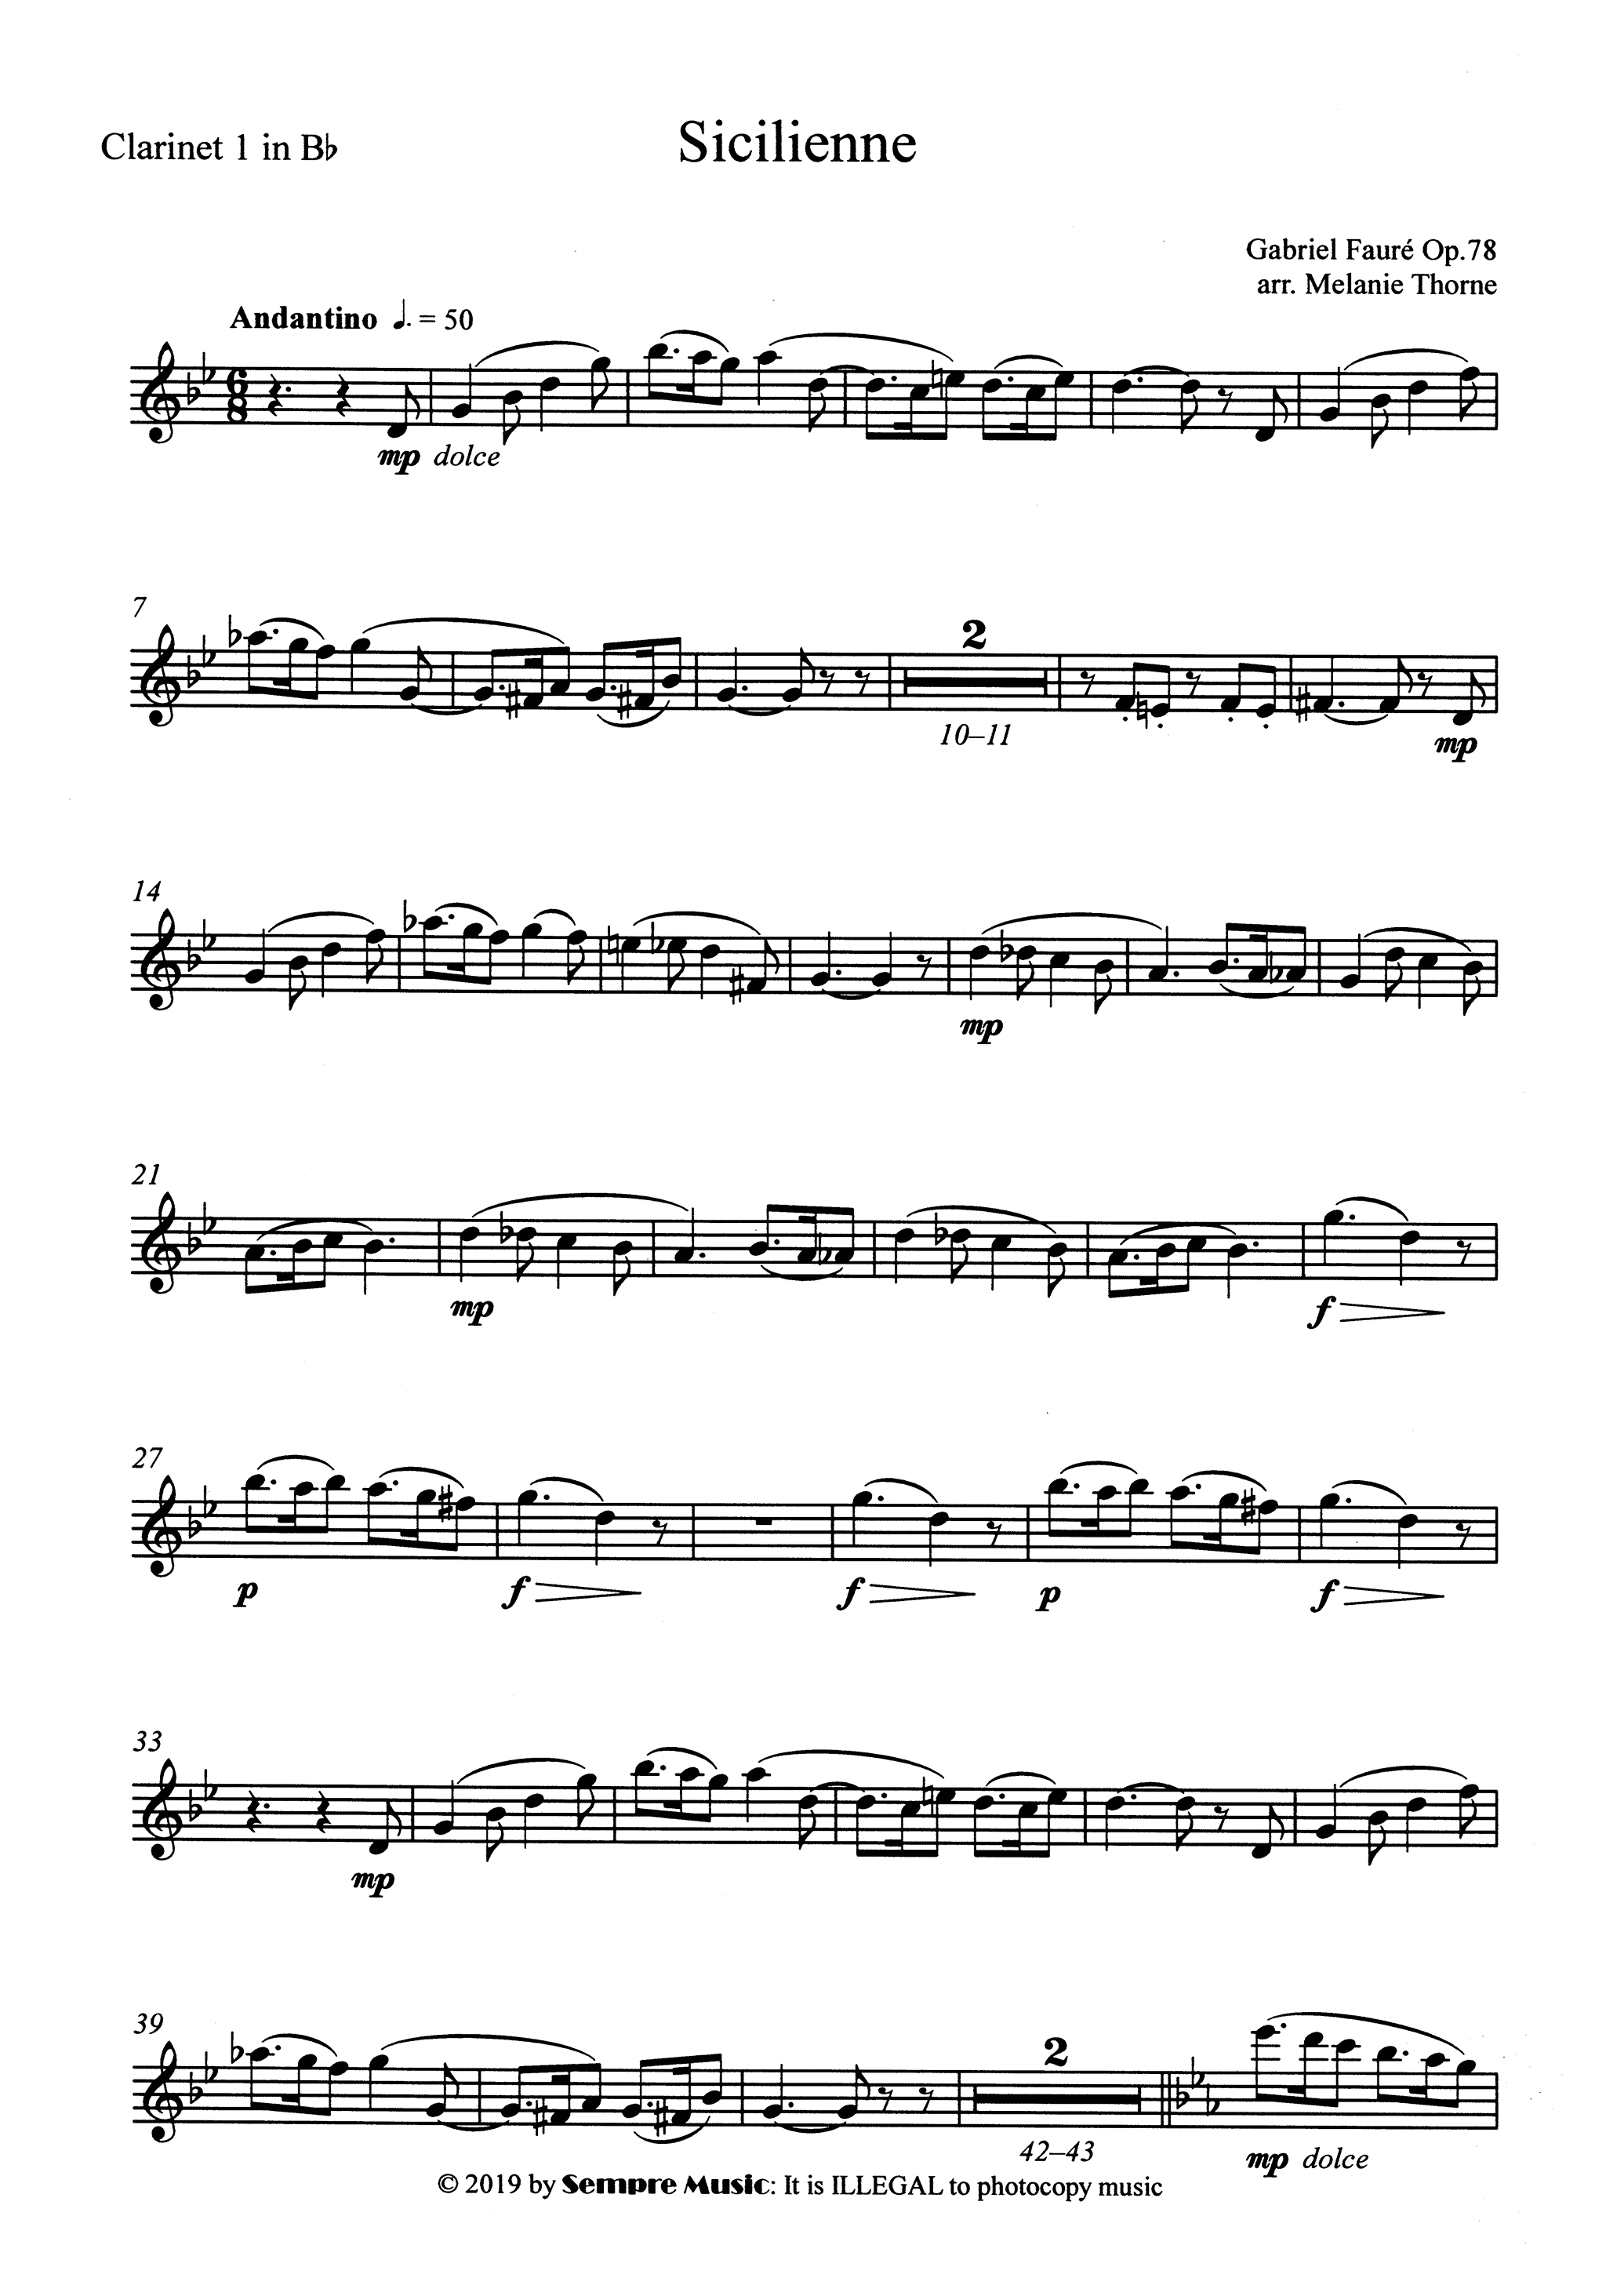 Sicilienne, Op. 78 First B-flat clarinet part